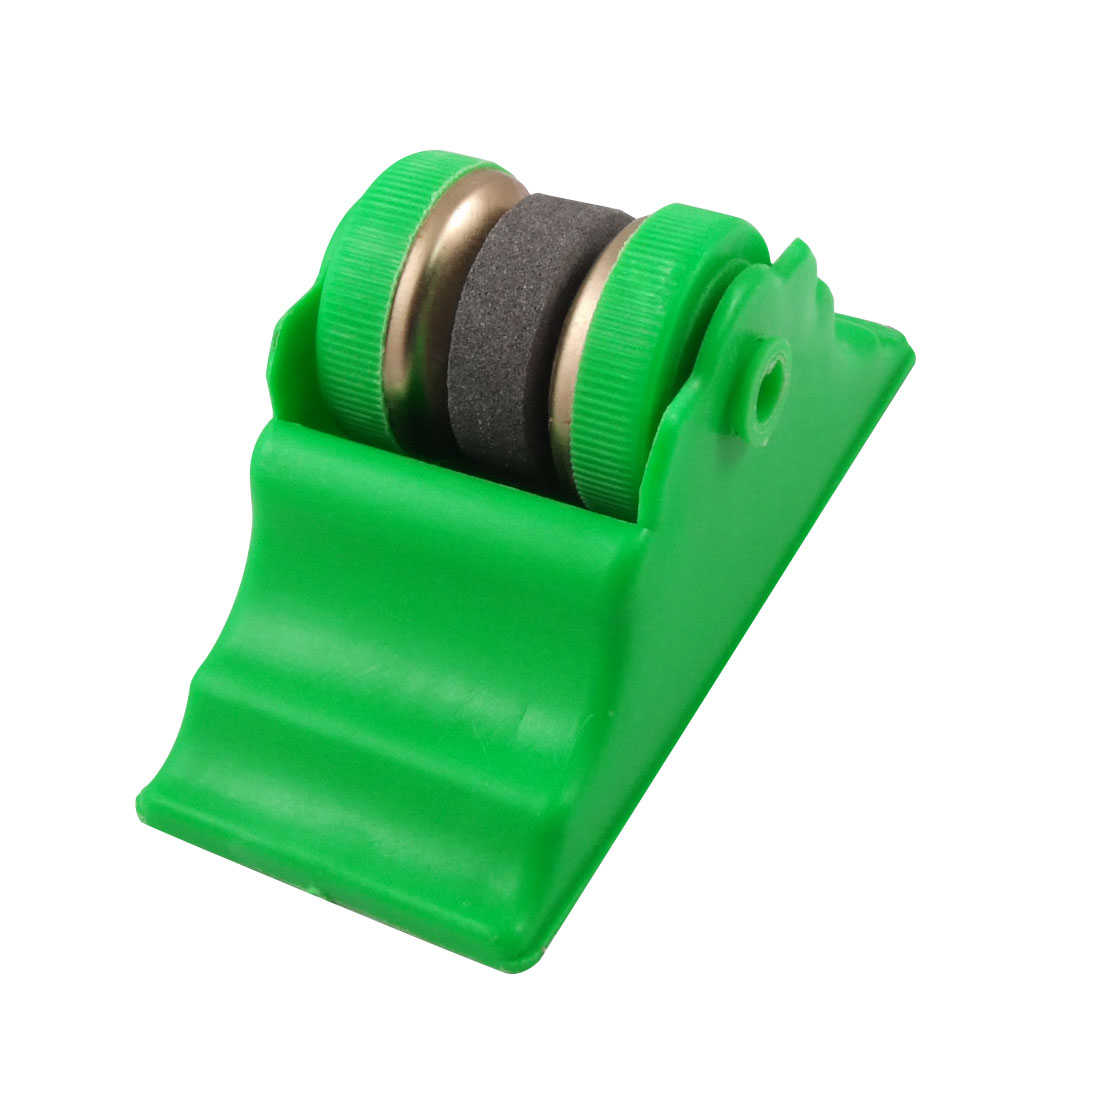 Unique Bargains Green Plastic Shell Abrader Whetstone Grit Sharpener Tool